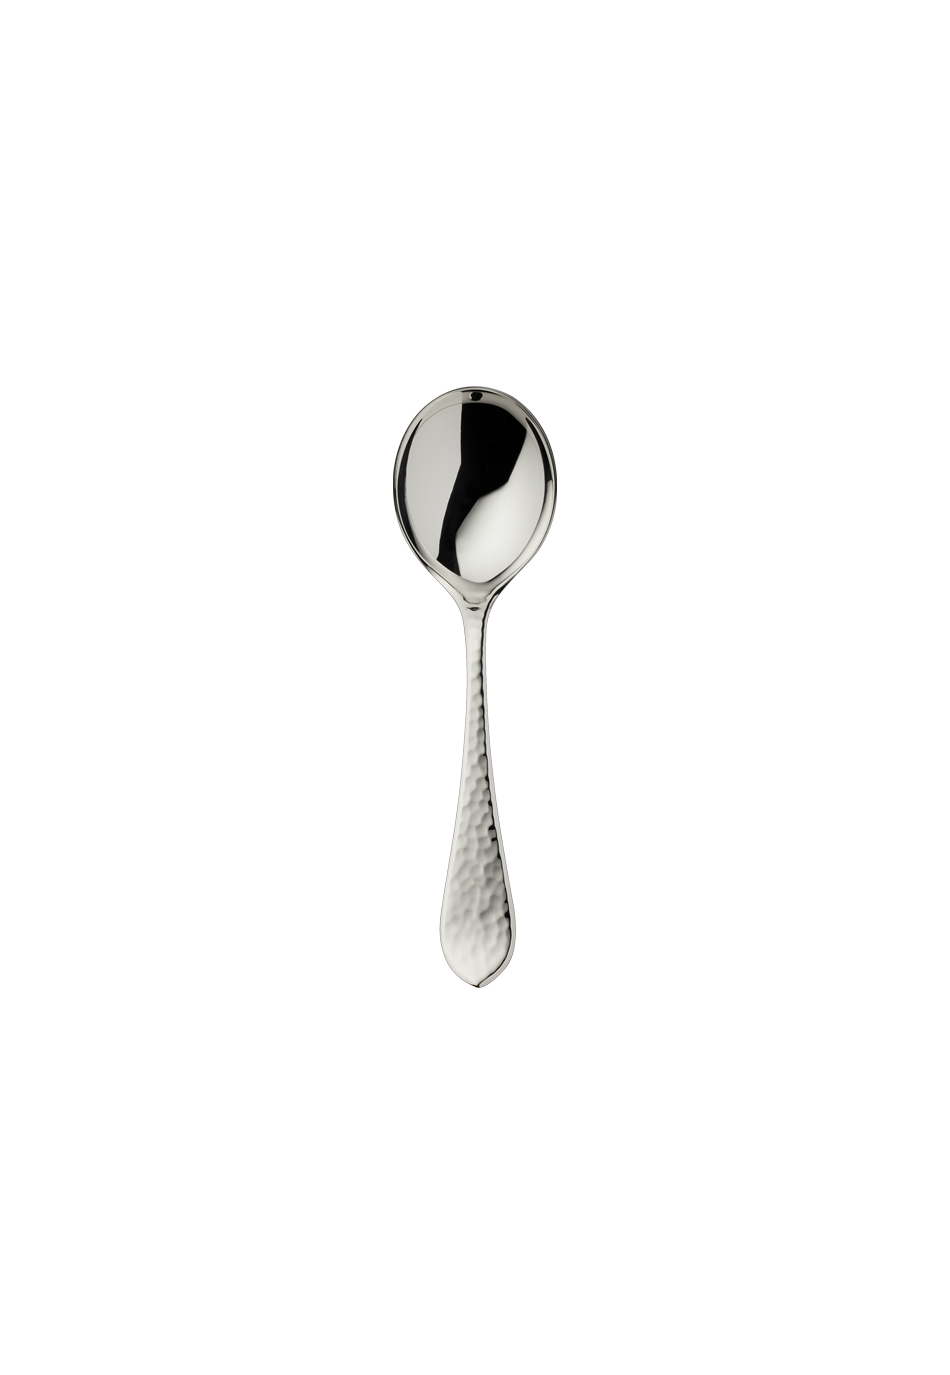 Martelé Sugar Spoon (150g massive silverplated)